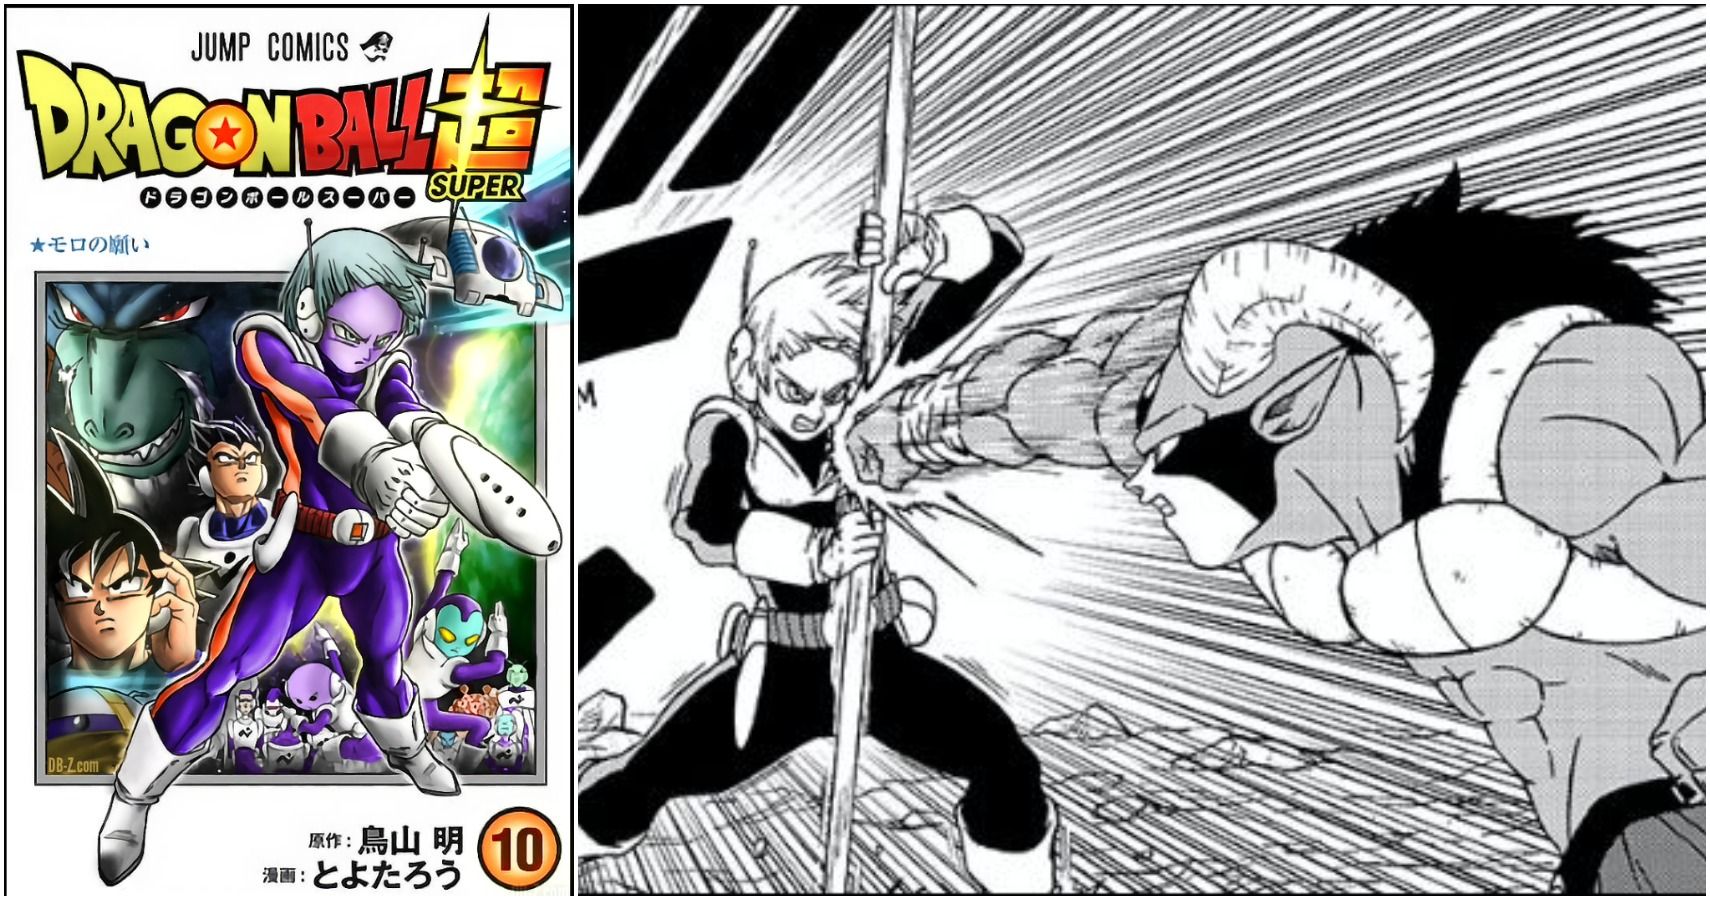 Dragon Ball Super Cover and Merus Versus Moro